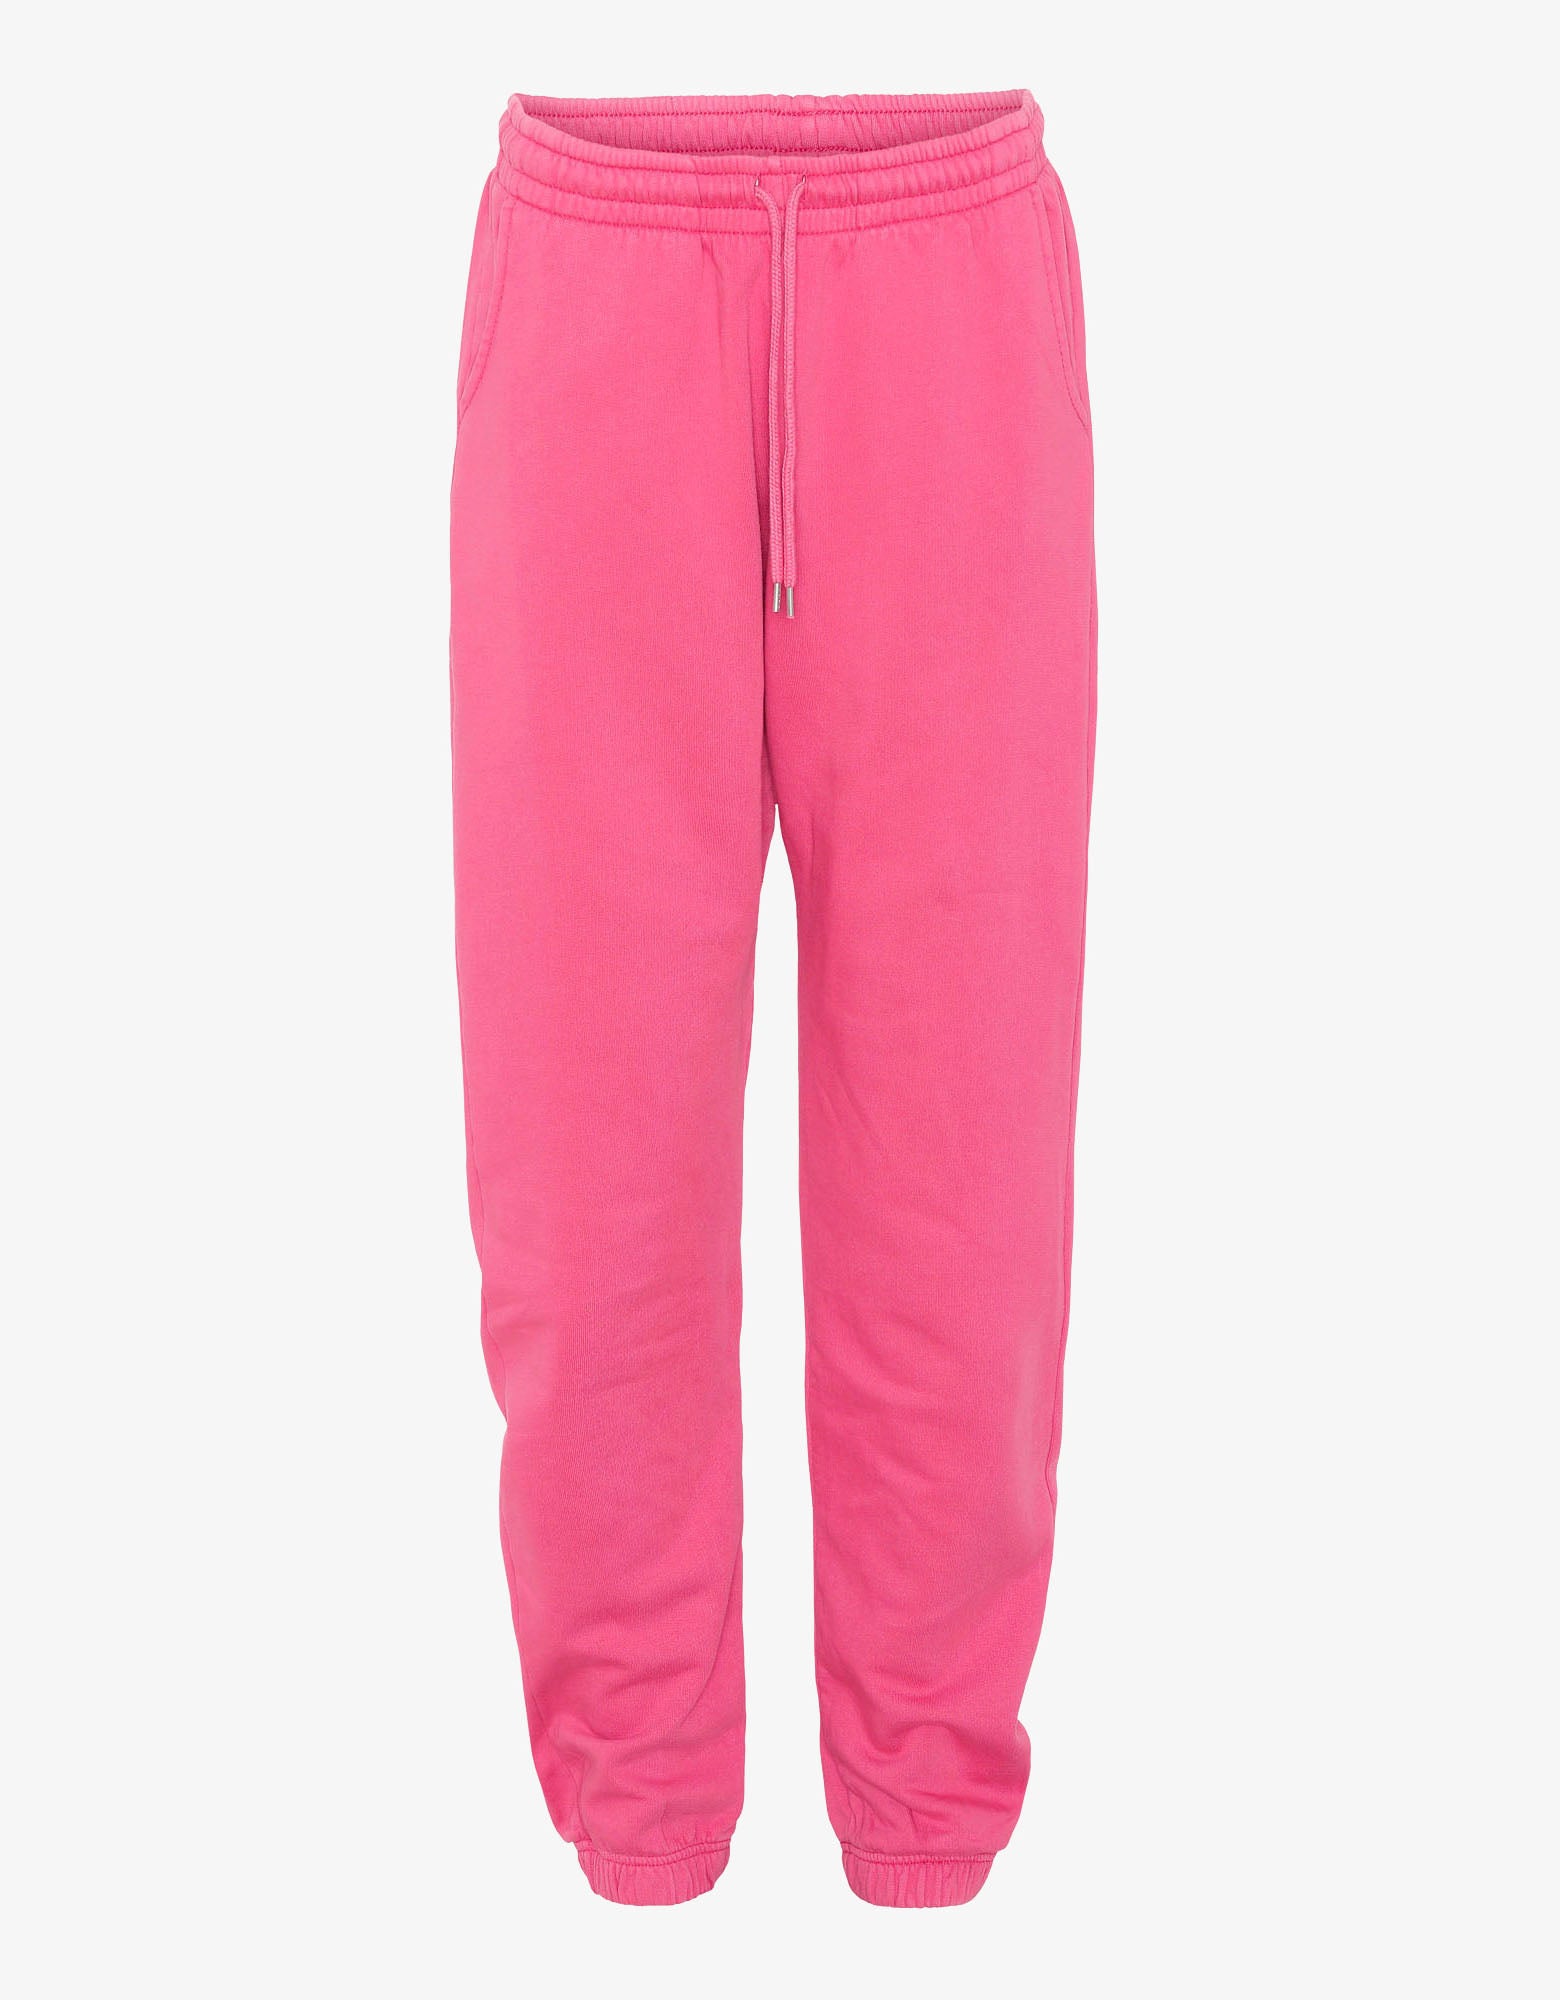 Womens Sleep Shorts Bubblegum Pink XS S & XL last sizes in stock - XS